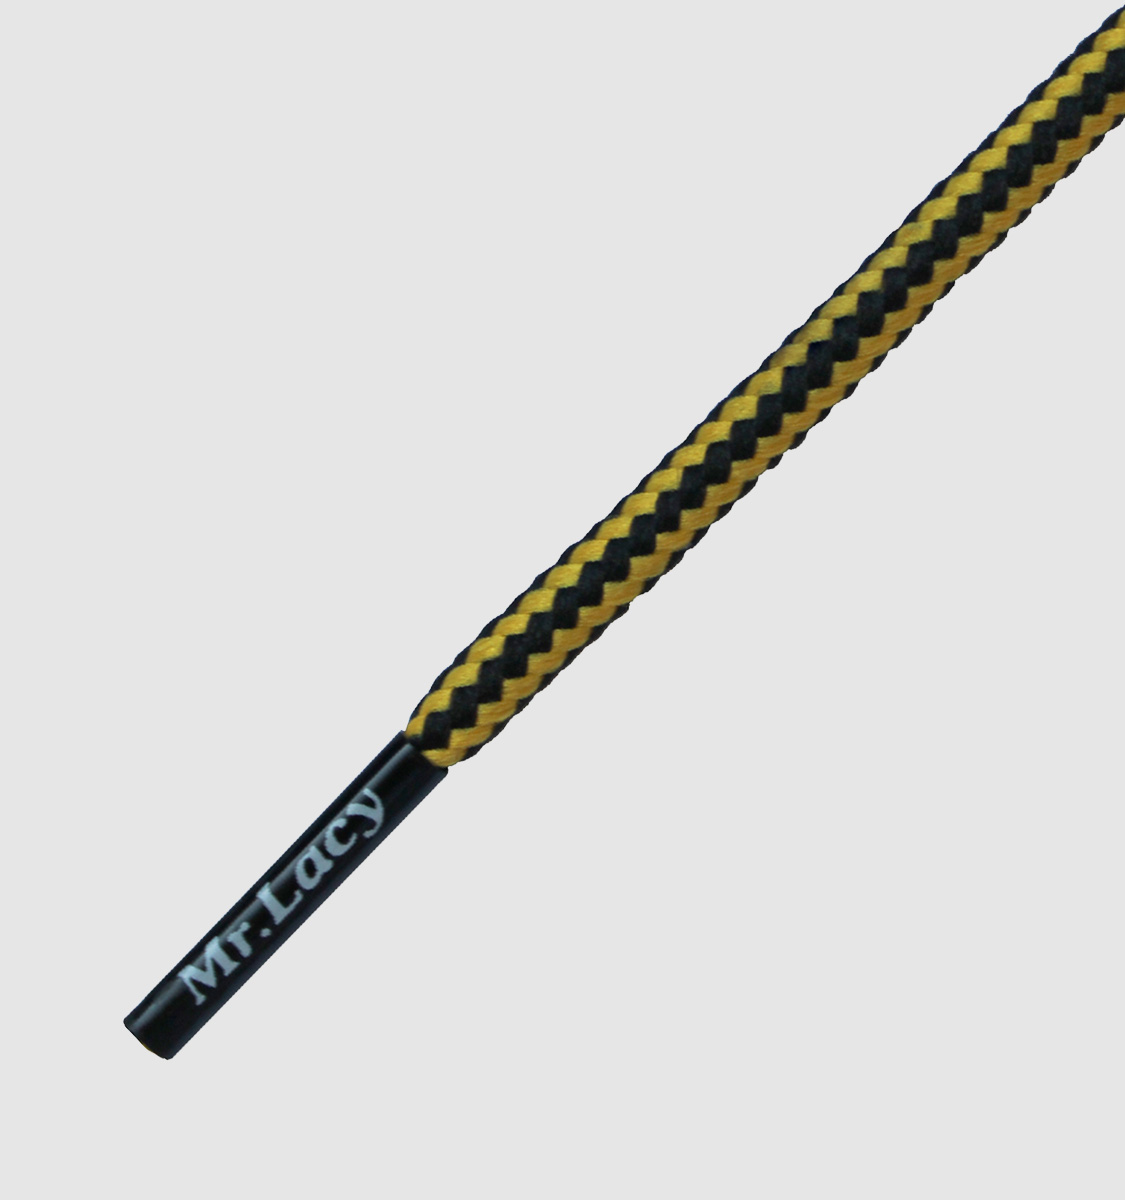 Hillies DM Black/Deep Yellow 140 - שרוכים עגולים מחוזקים לנעלי טימברלנד בצבע שחור צהוב חרדל